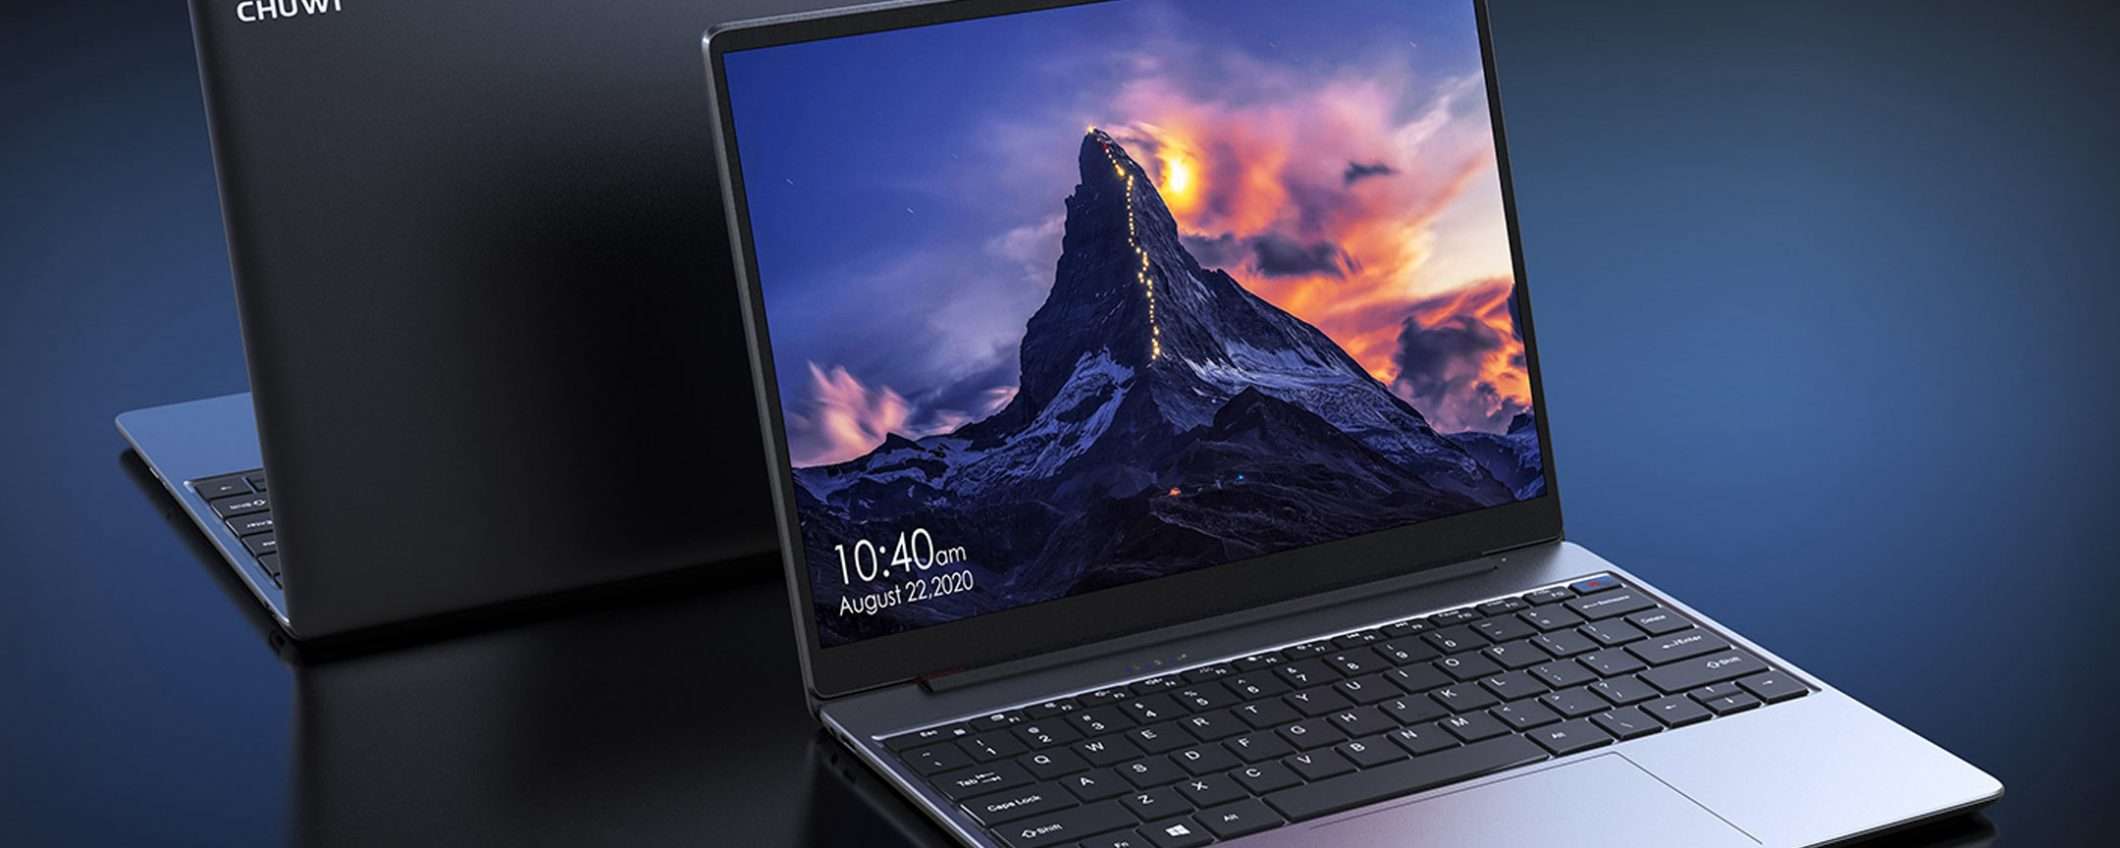 Chuwi GemiBook: ottimo laptop, OTTIMO PREZZO